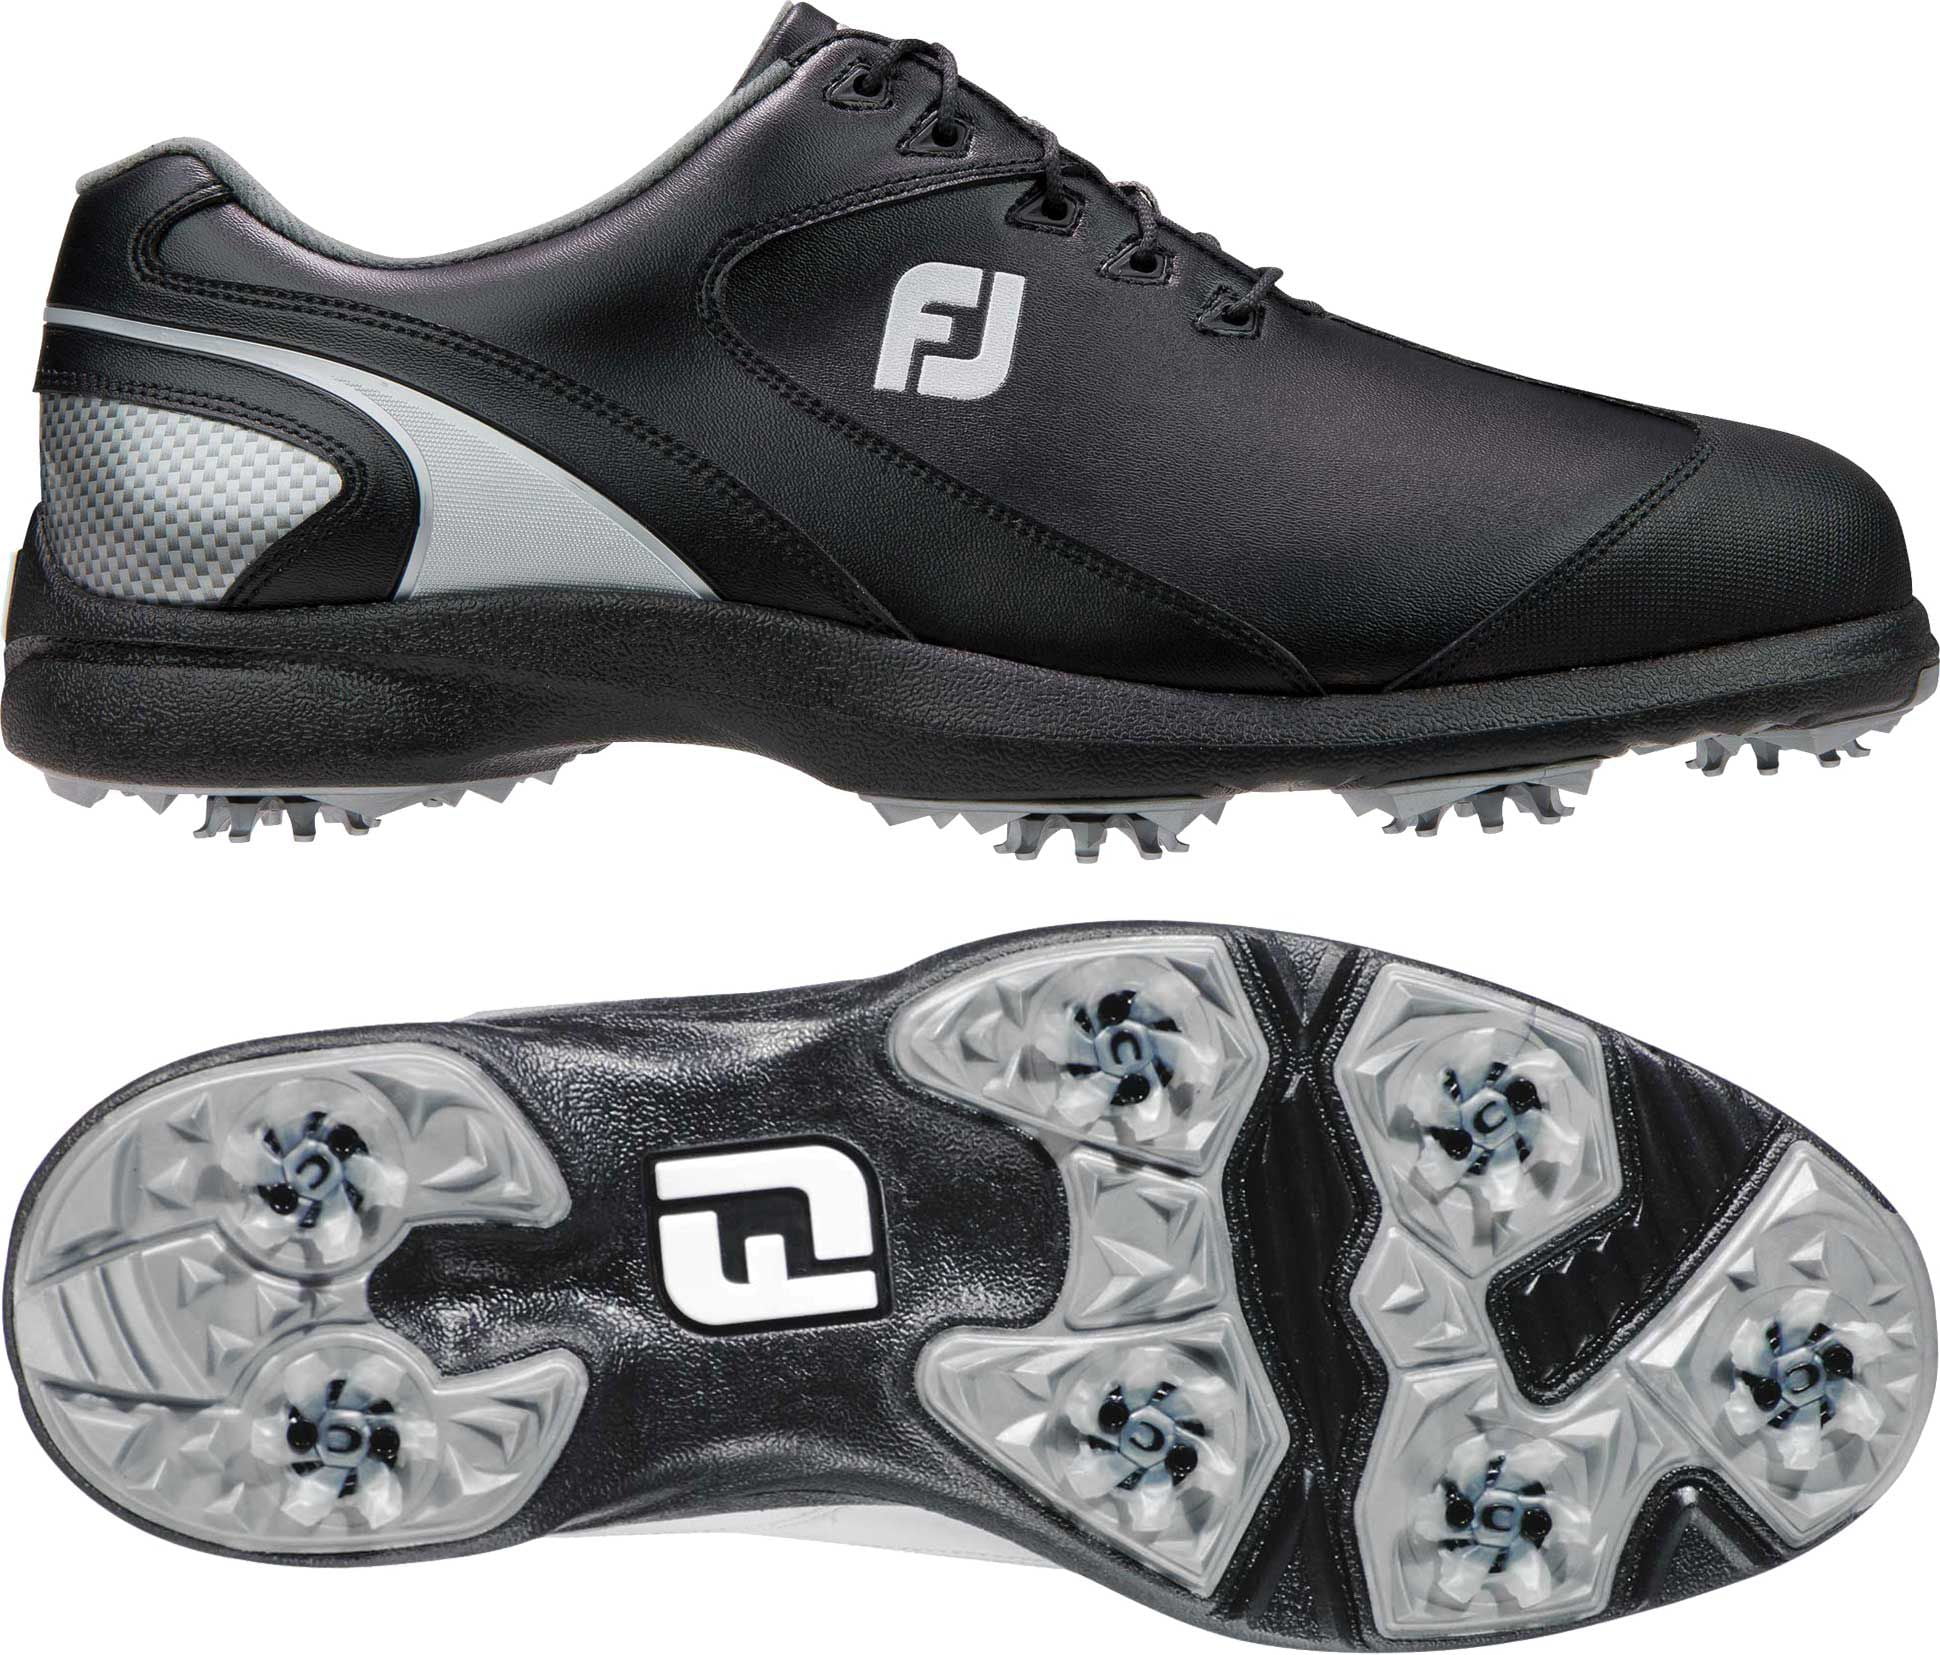 FootJoy Sport LT Golf Shoes (Black/Silver, 11.5) - Walmart.com ...